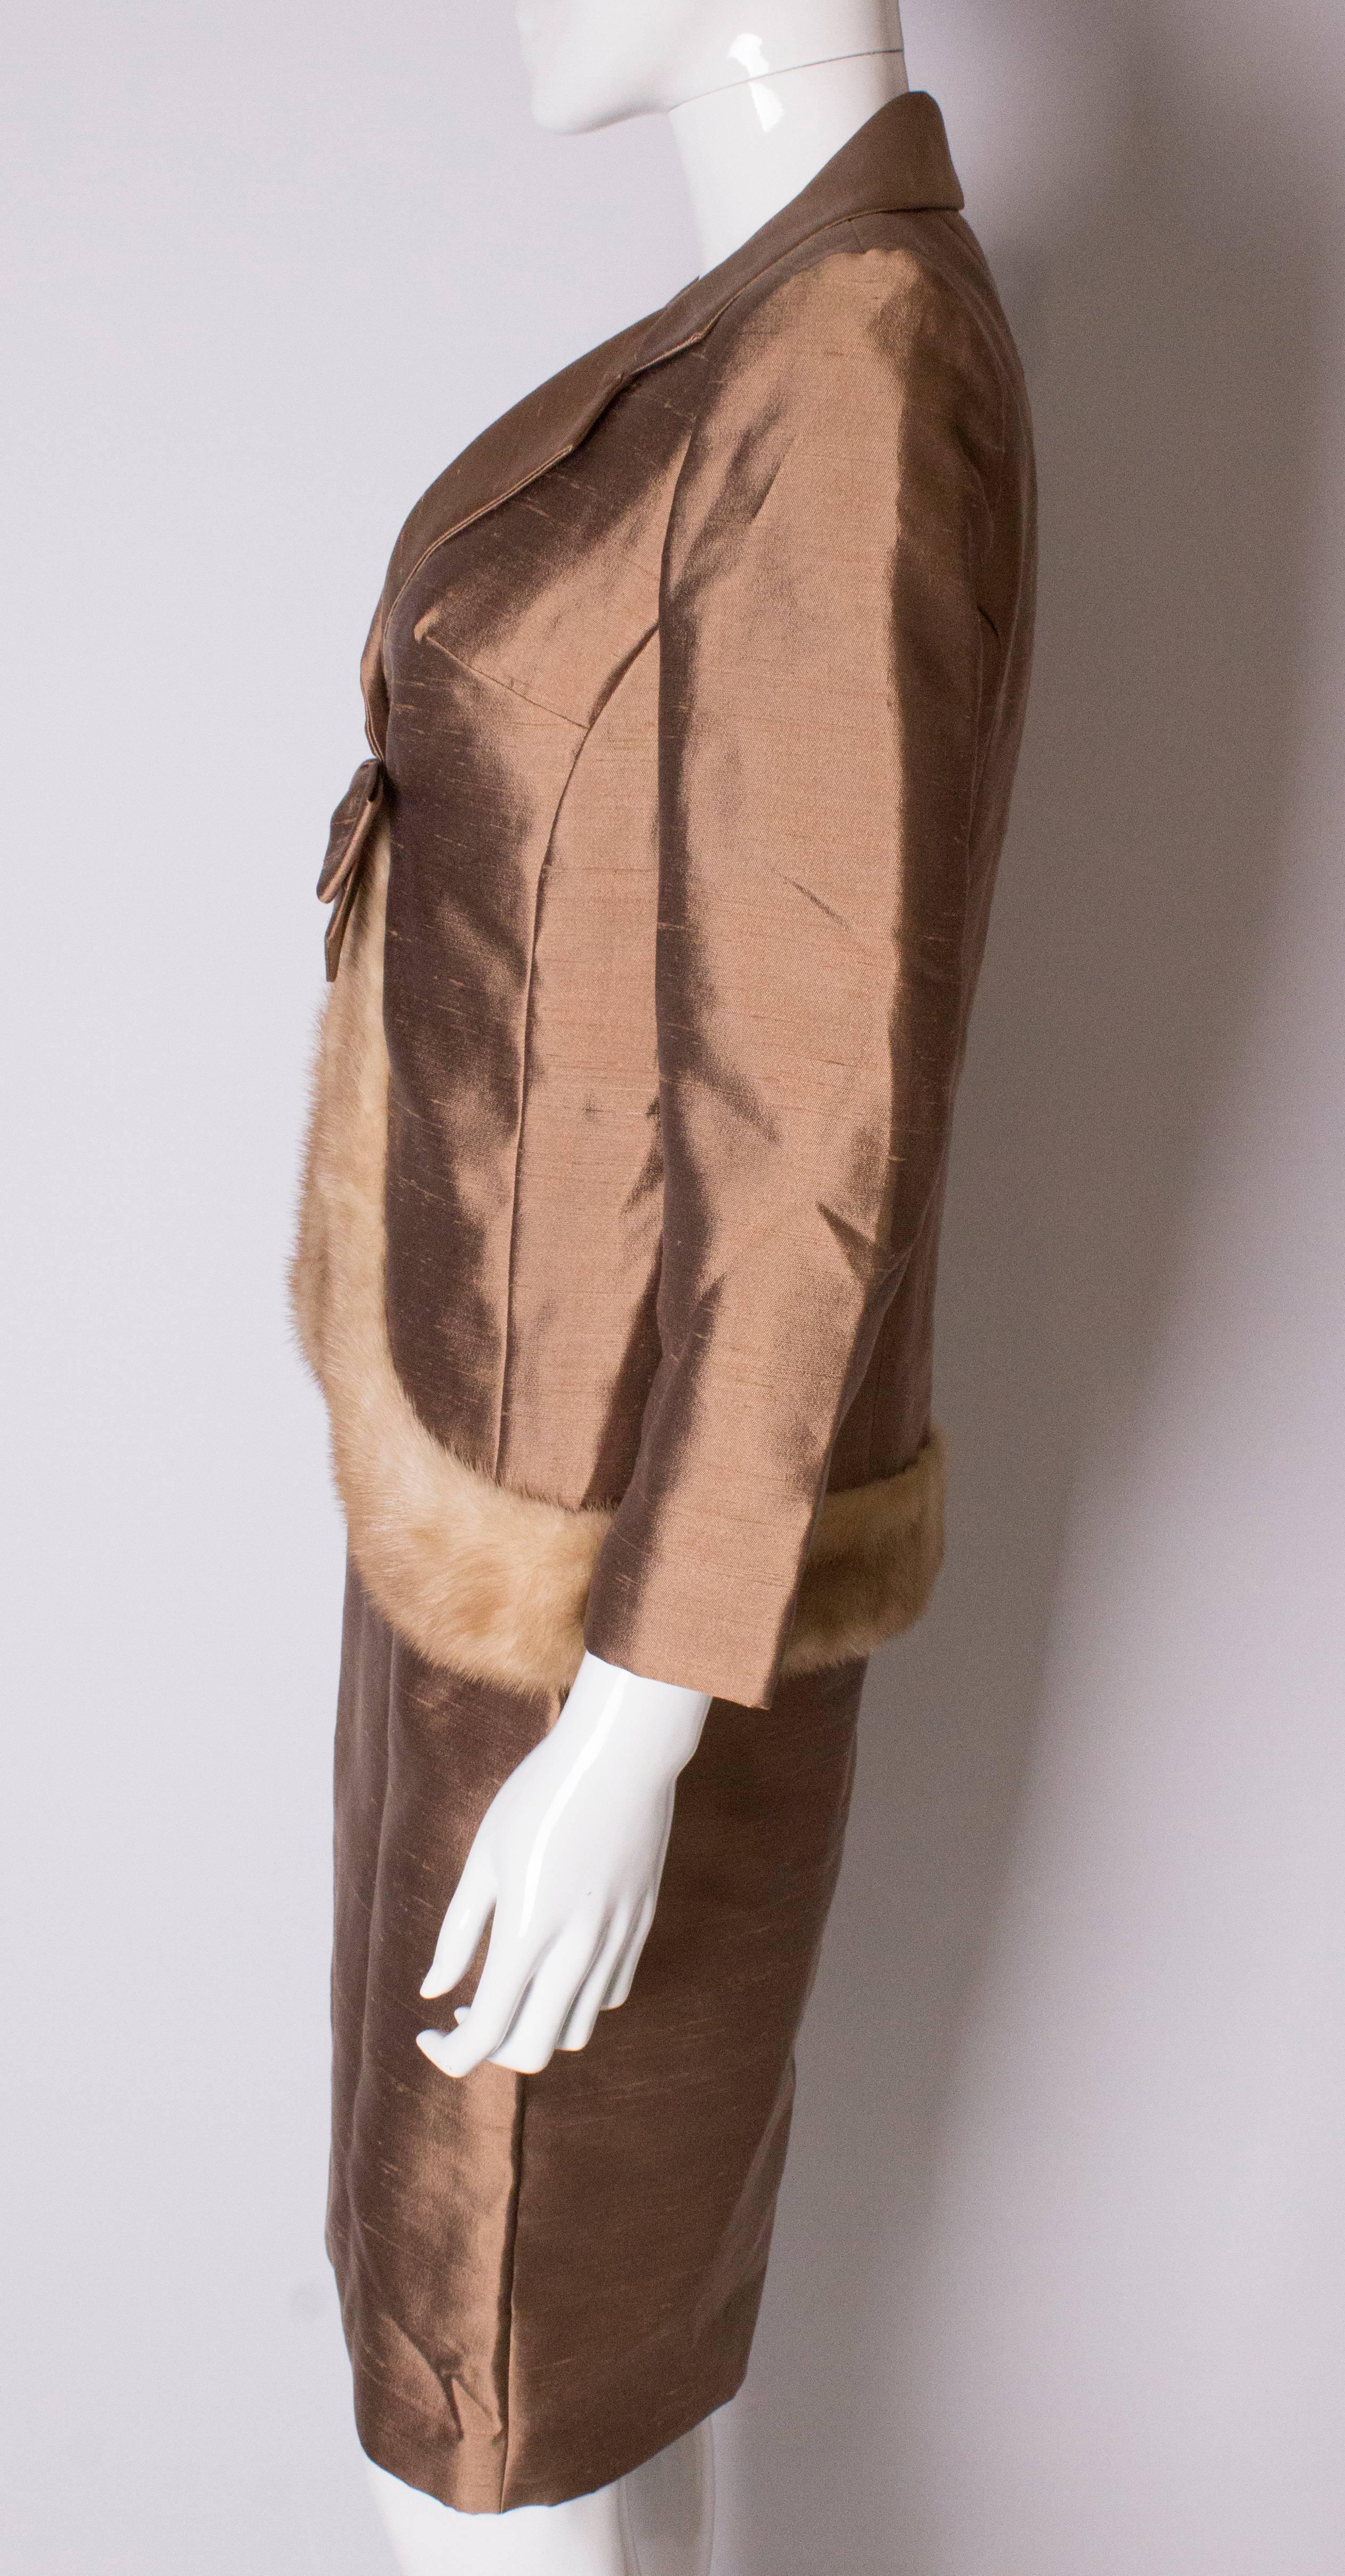 silk dress with fur coat